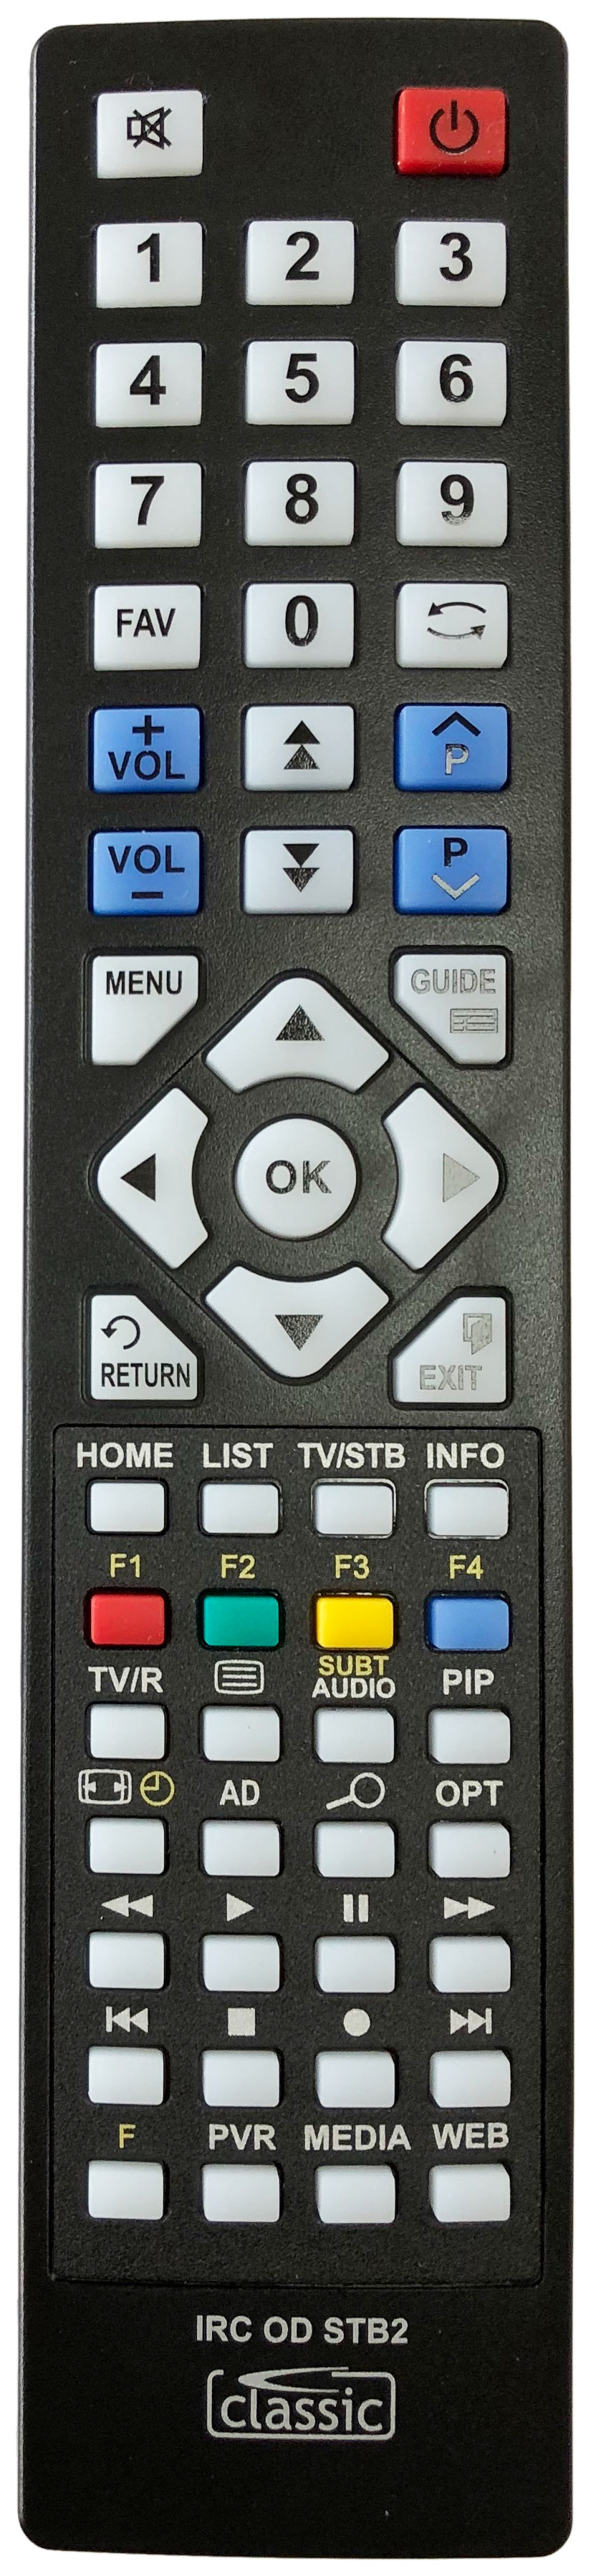 HUMAX RM-H06S Remote Control Alternative